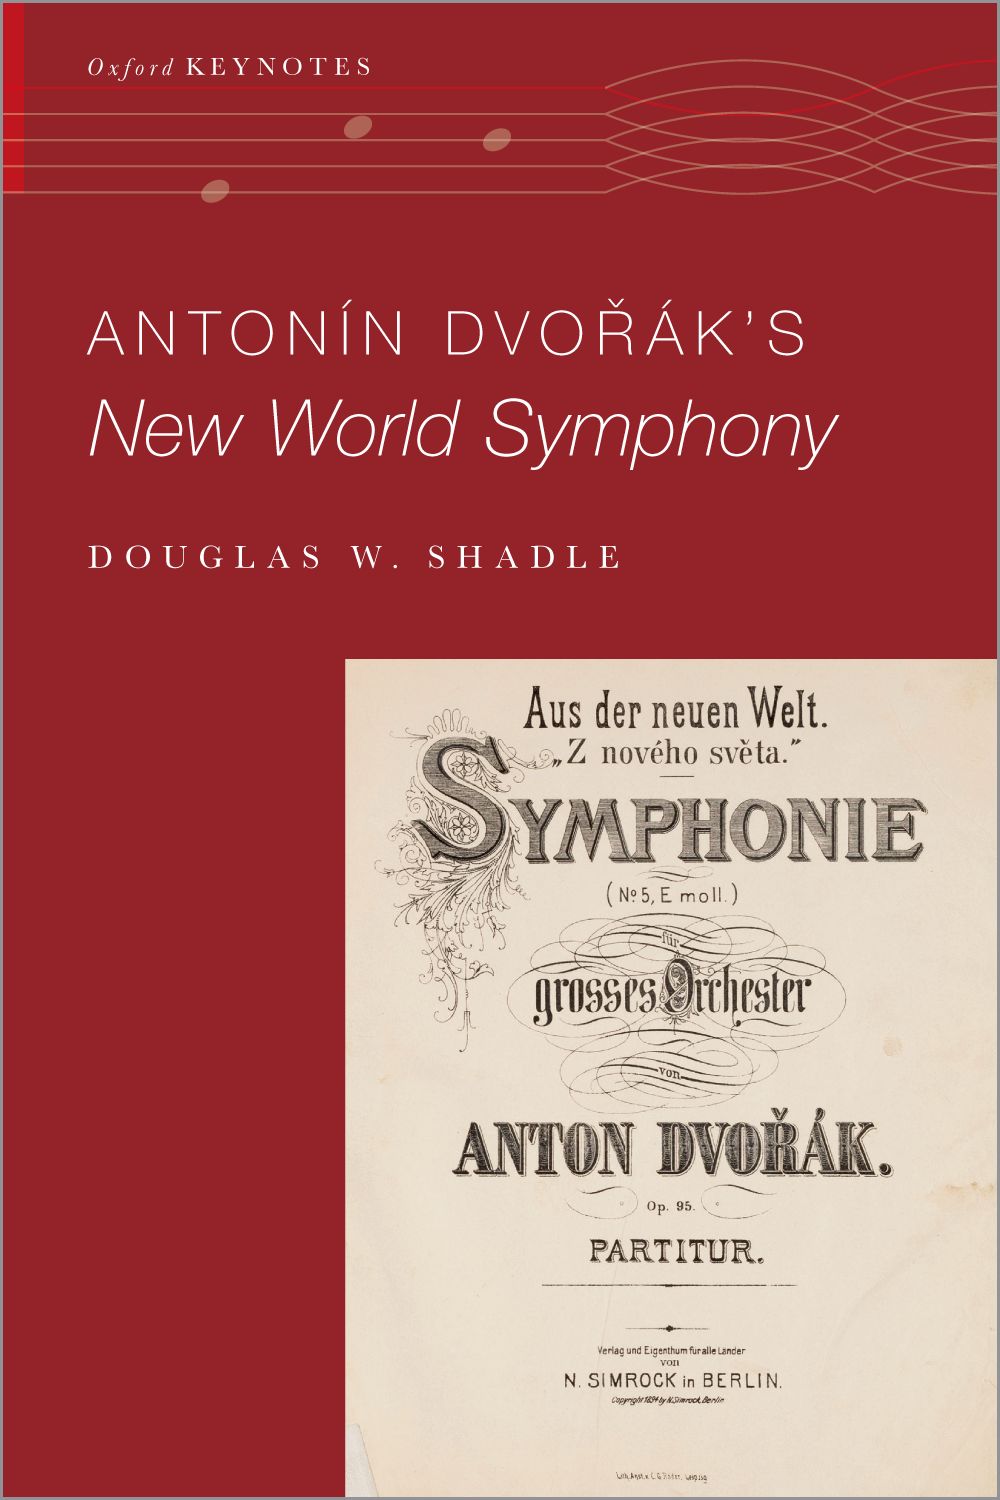 Antonin Dvorak's New World Symphony: History